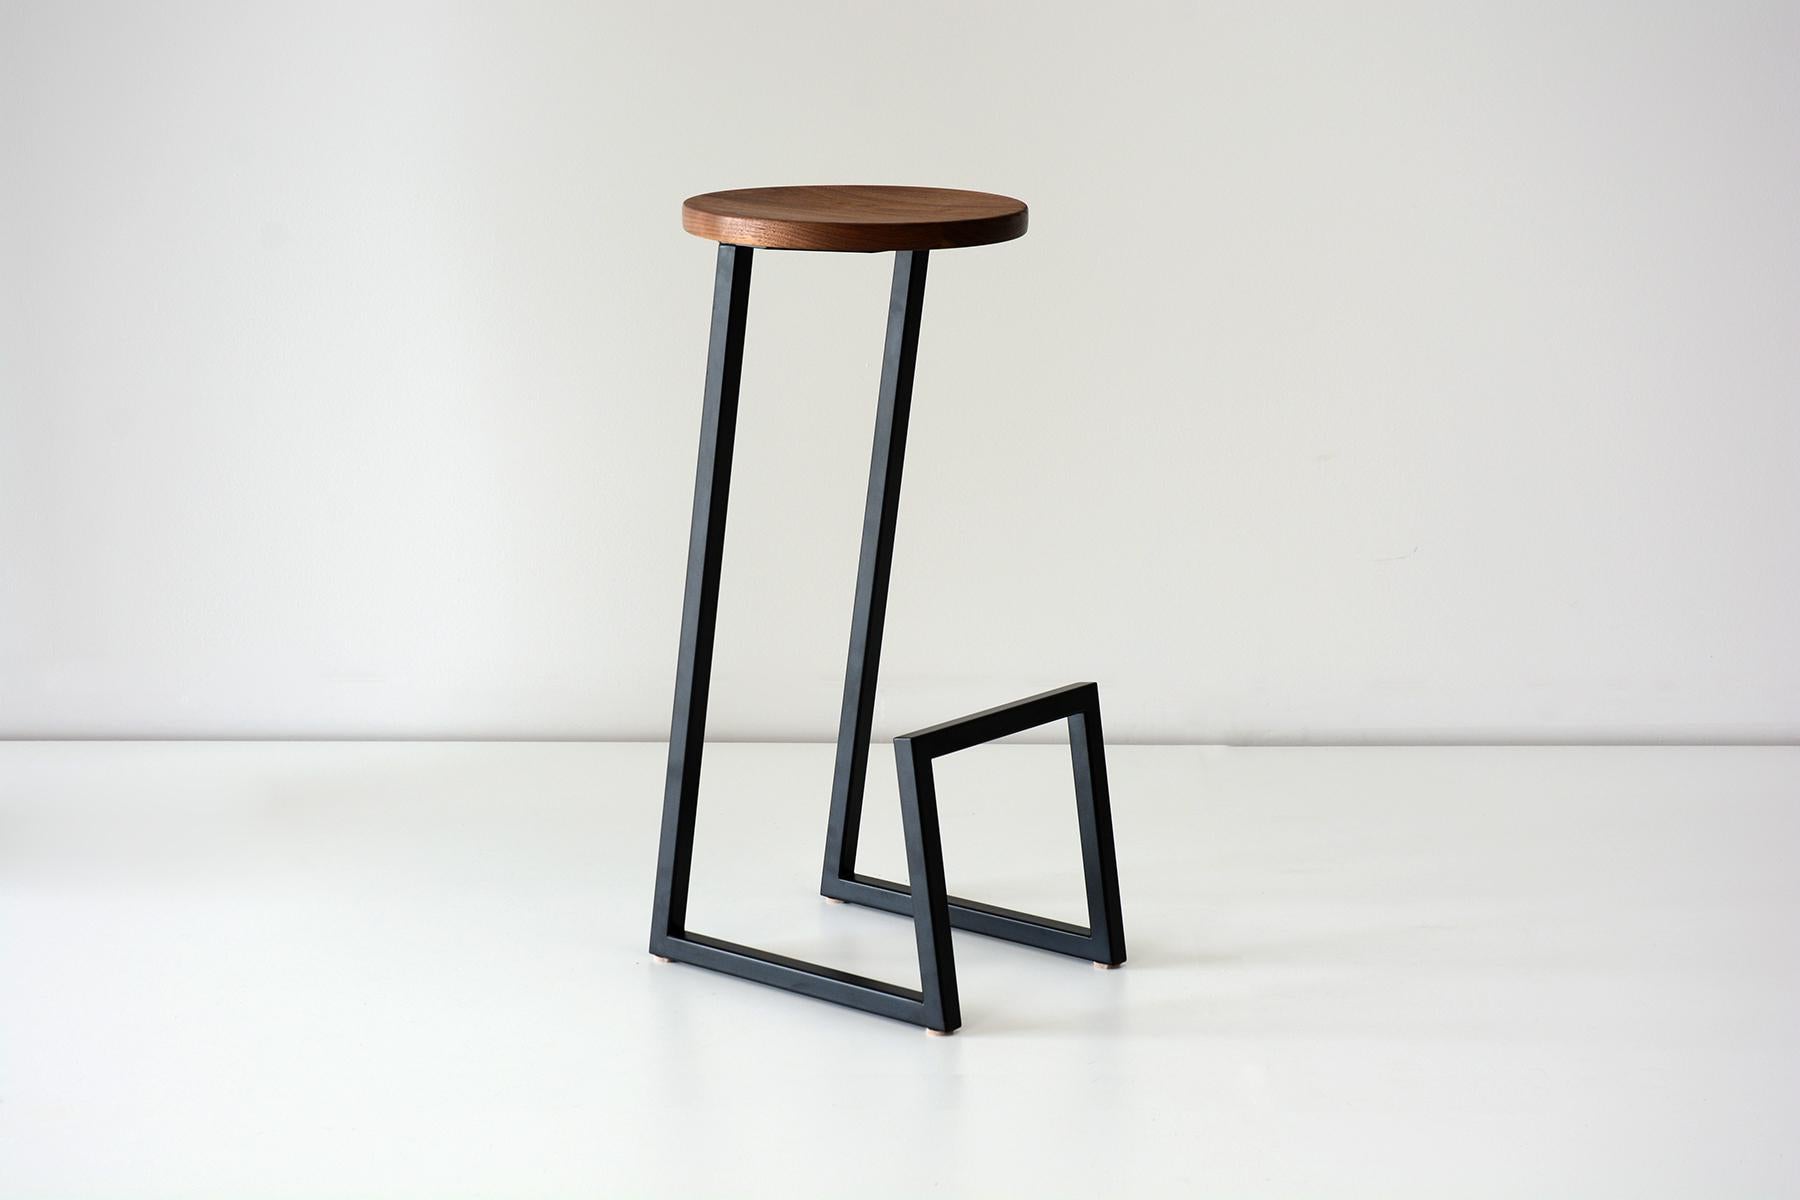 Walnut corktown stool by Hollis & Morris
Dimensions:
Seat diameter 13